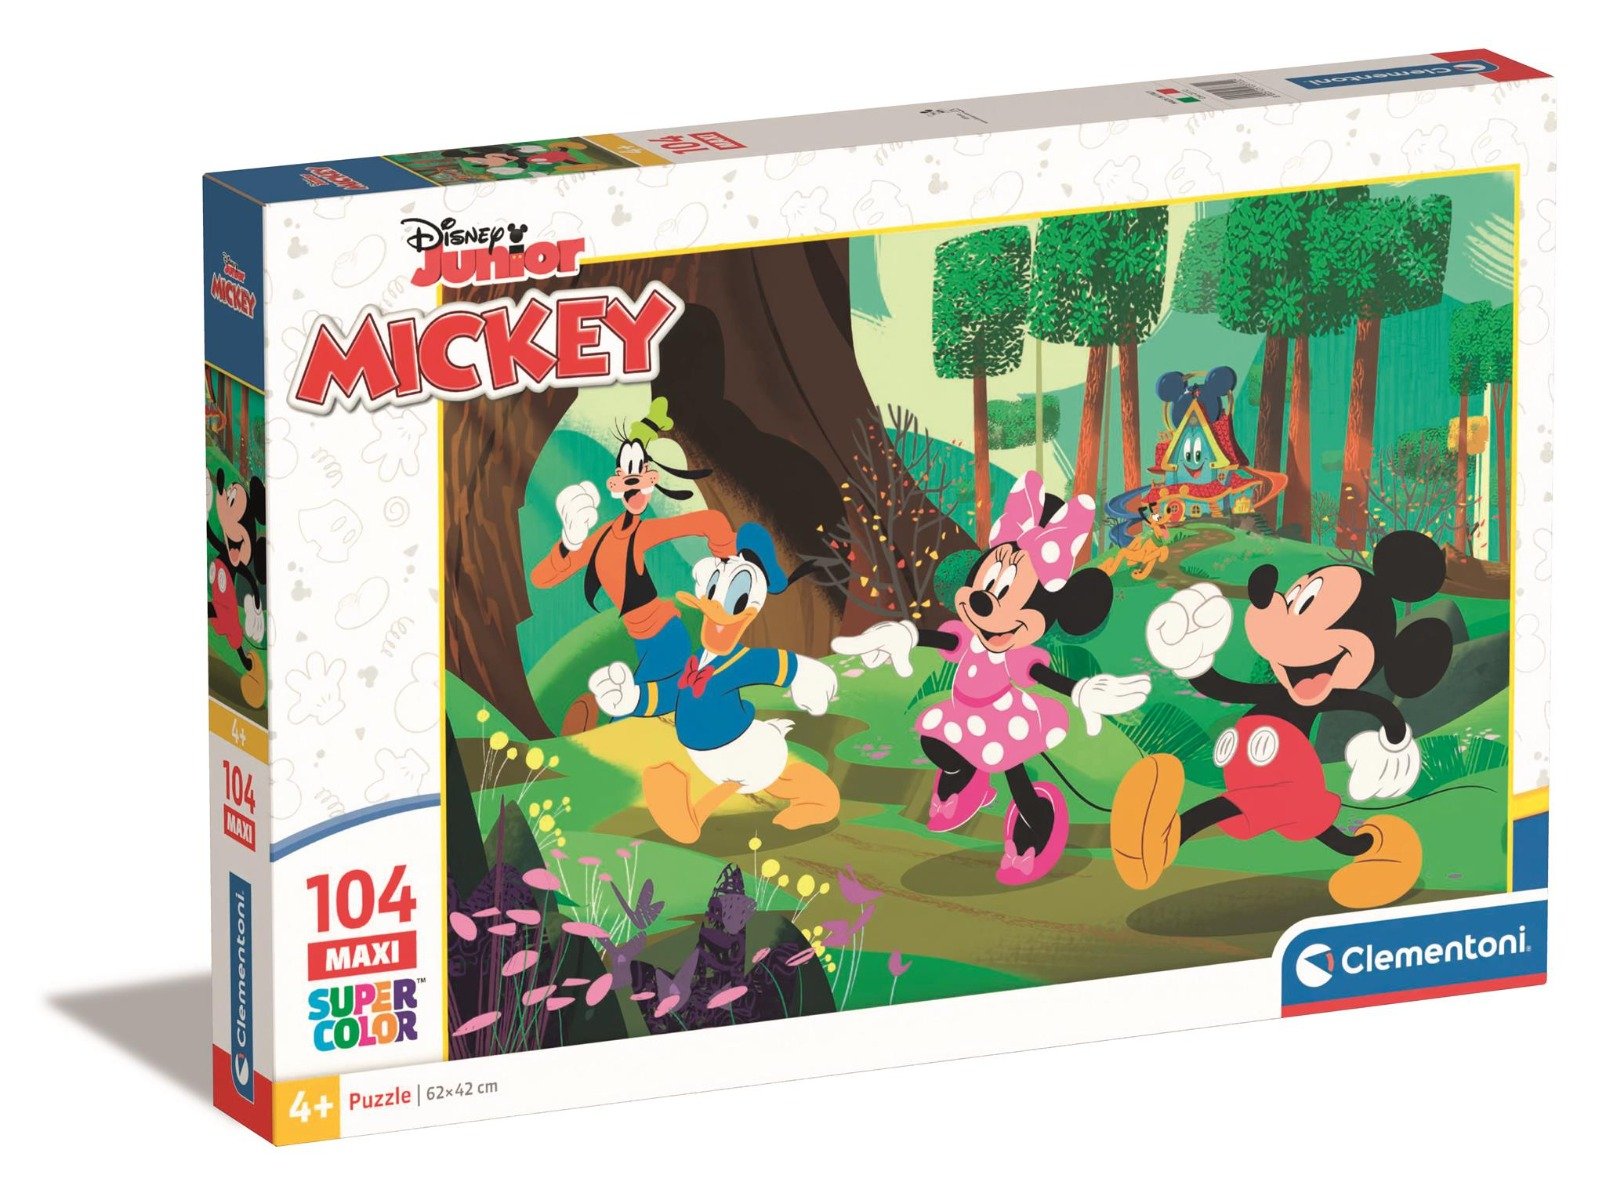 Poze Puzzle Clementoni Maxi, Disney Mickey Mouse, 104 piese